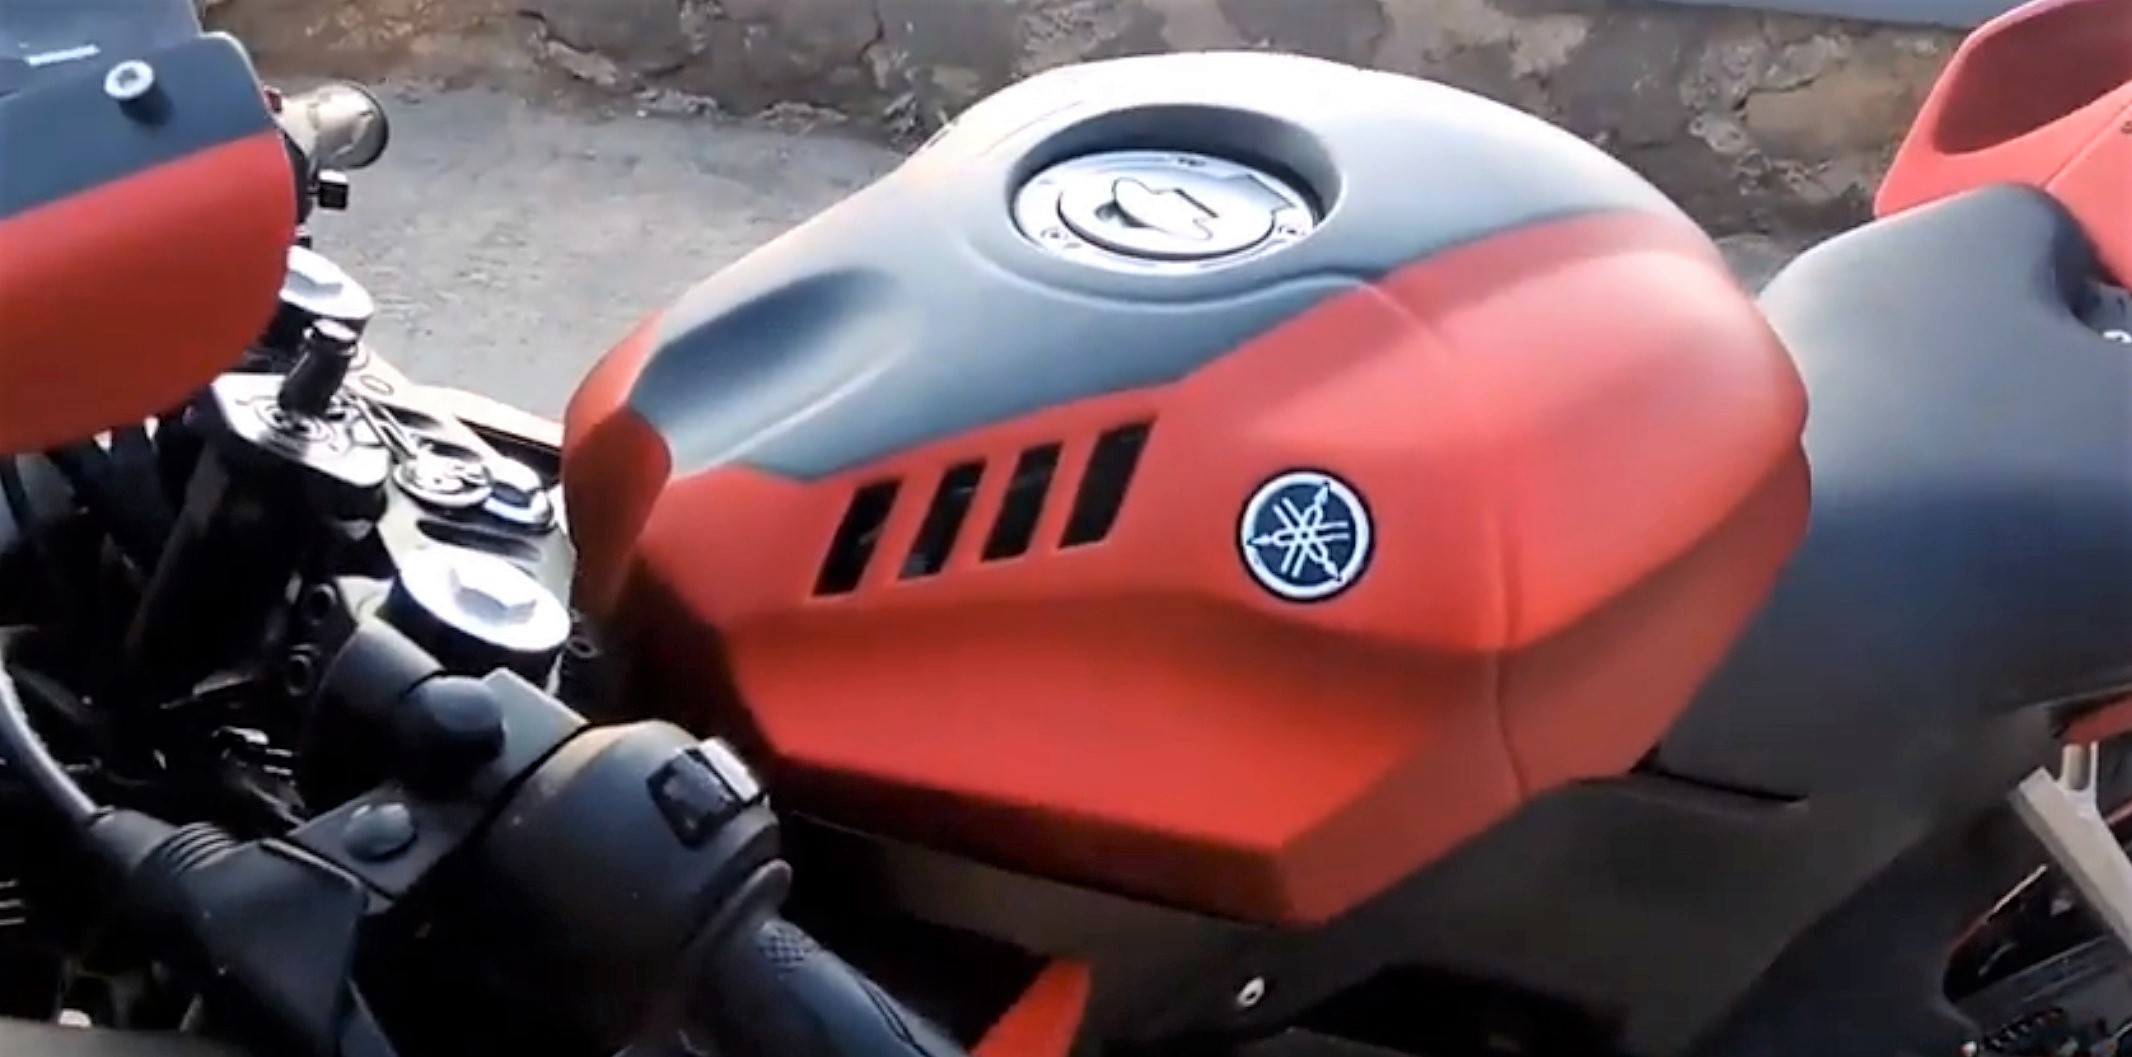 Yamaha R15 Gets Makeover - Looks Like R1M Superbike - background